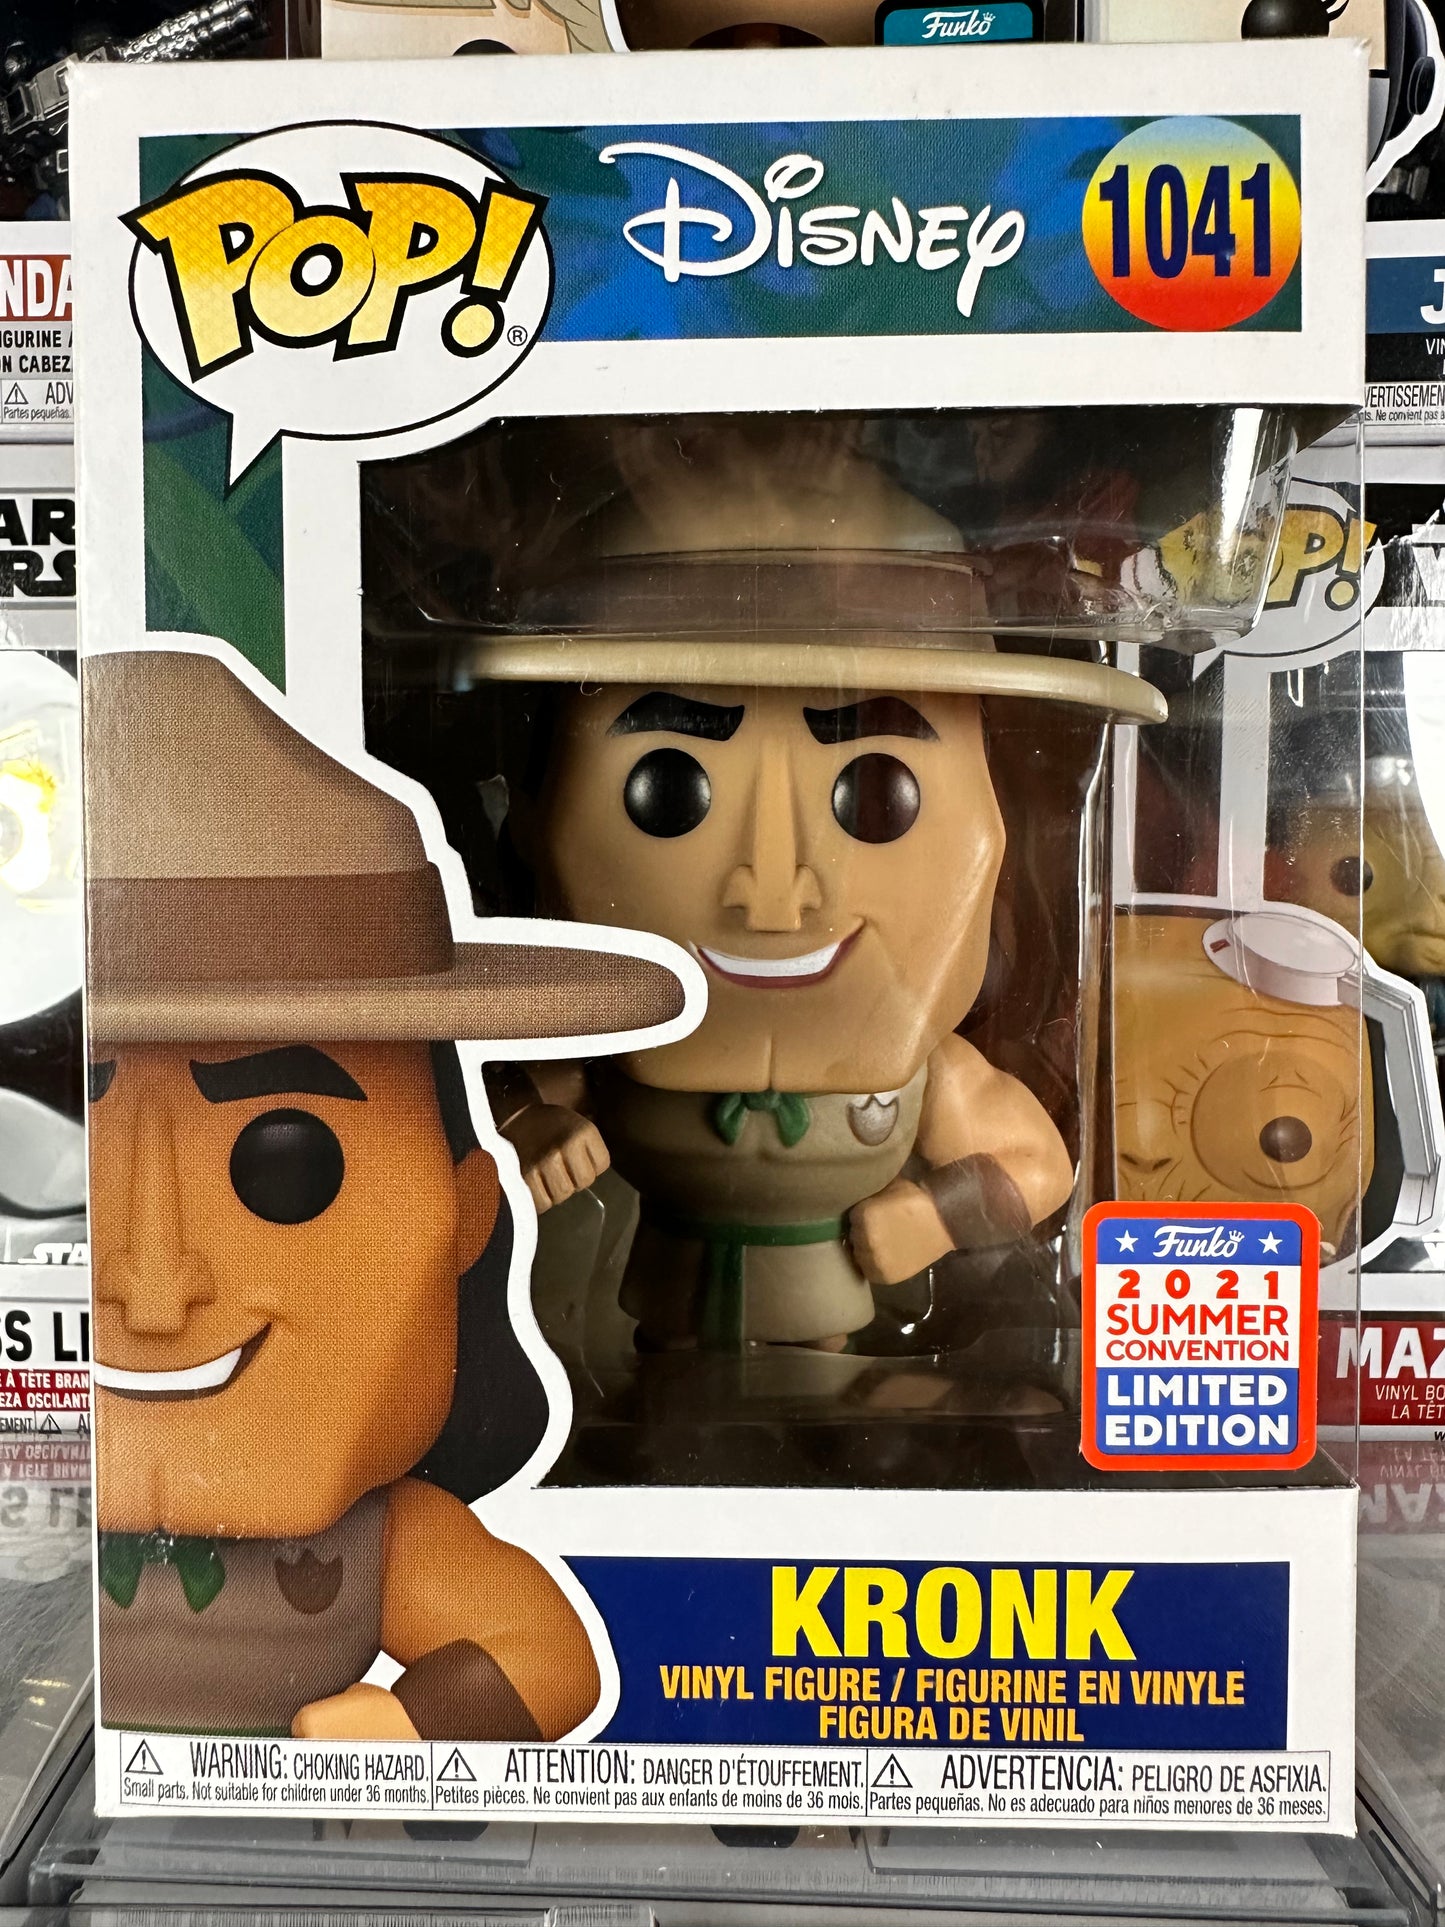 Disney - Kronk (Scout Leader) (1041) (2021 Summer Convention)